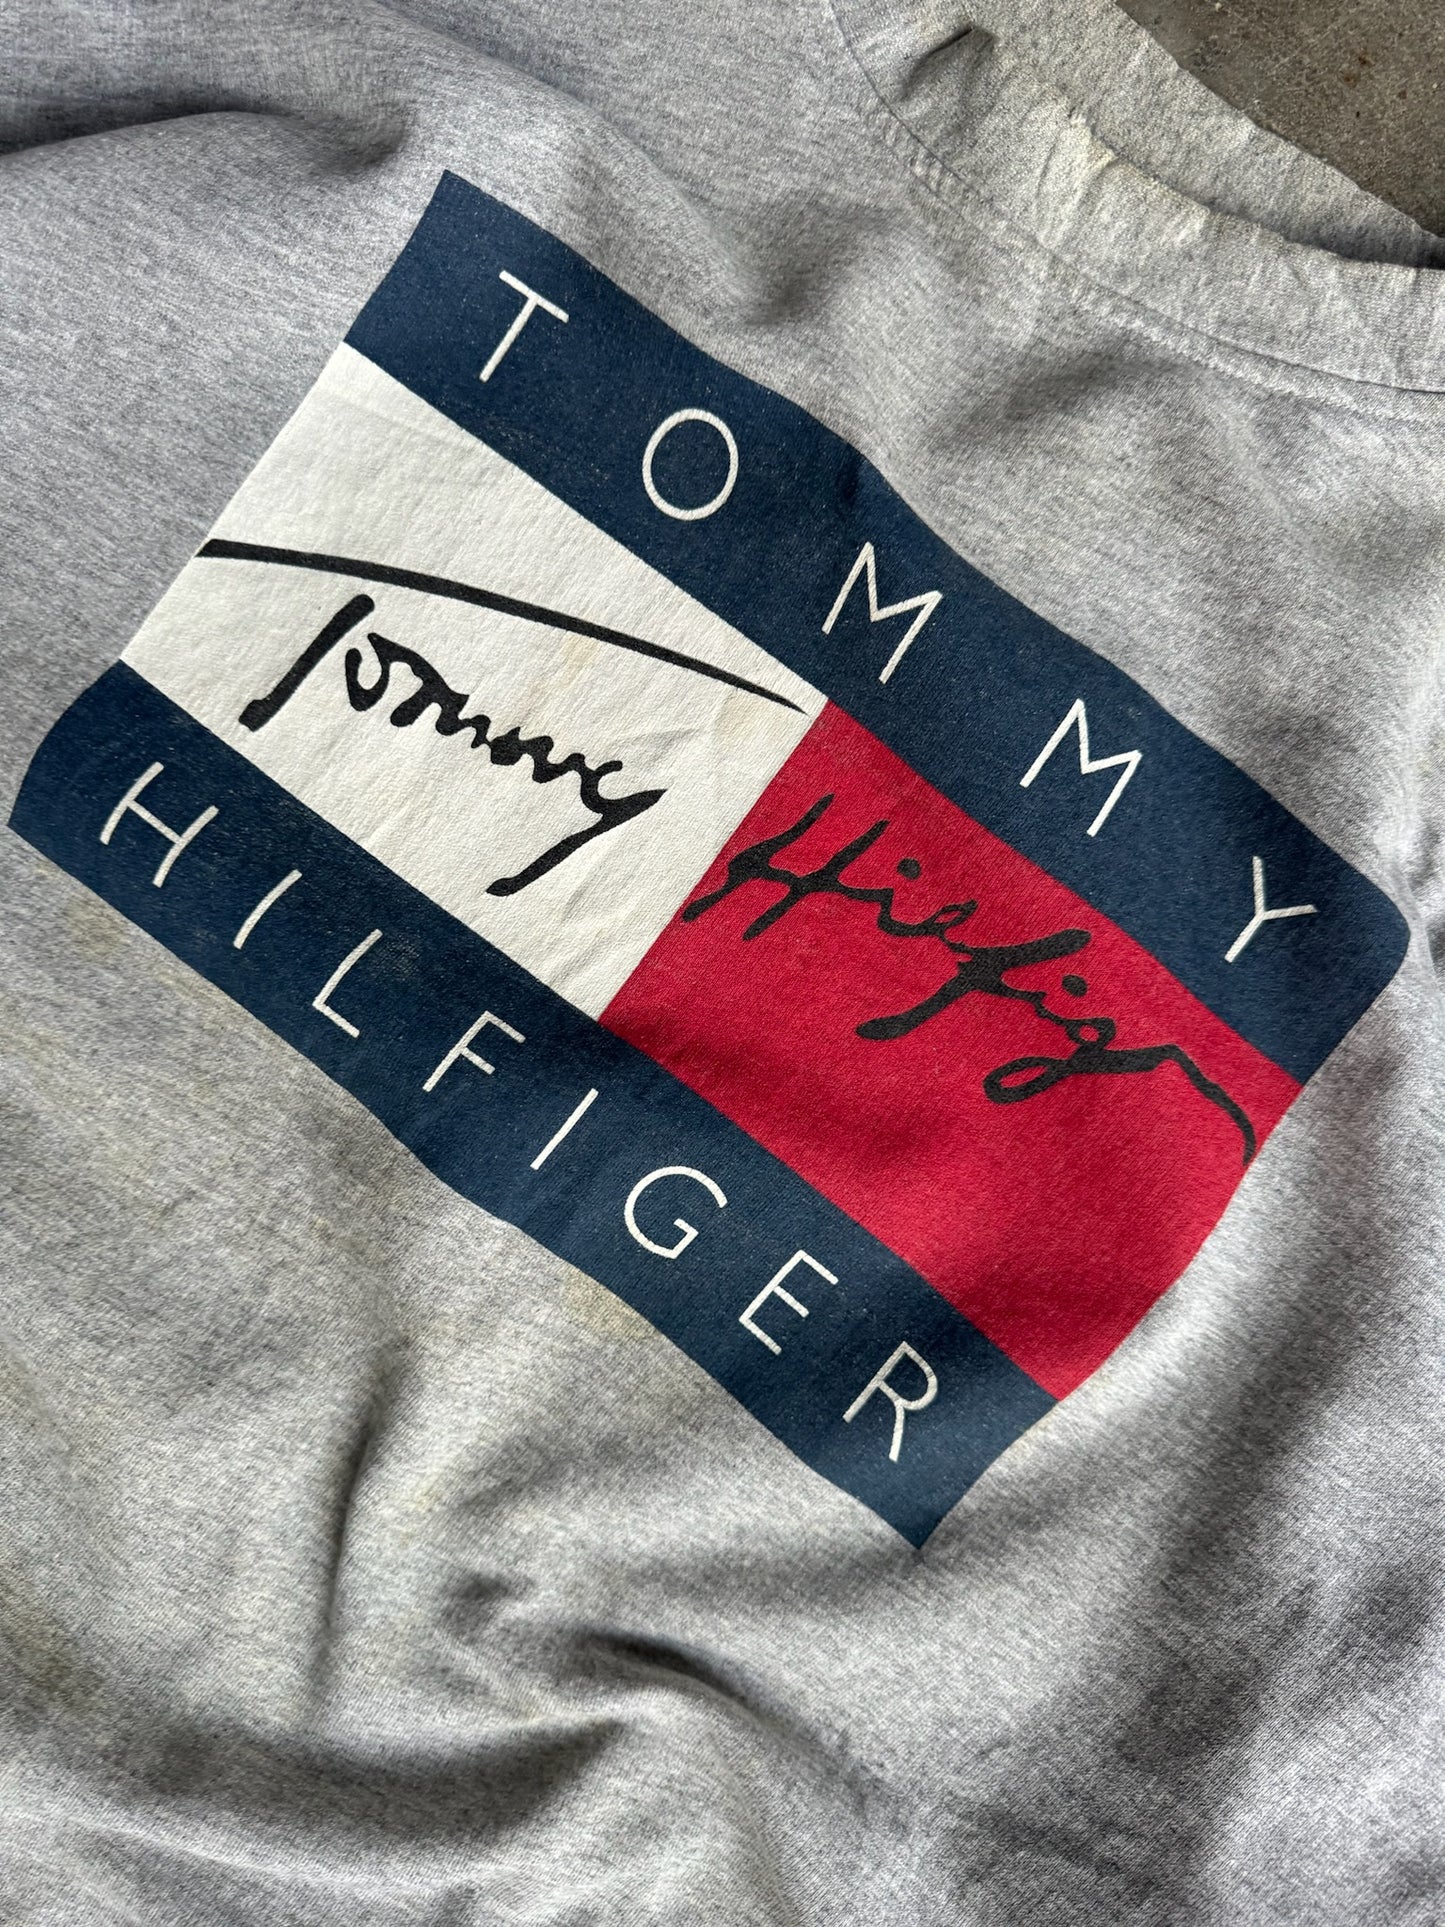 Vintage Tommy Hilfiger Crew - XL